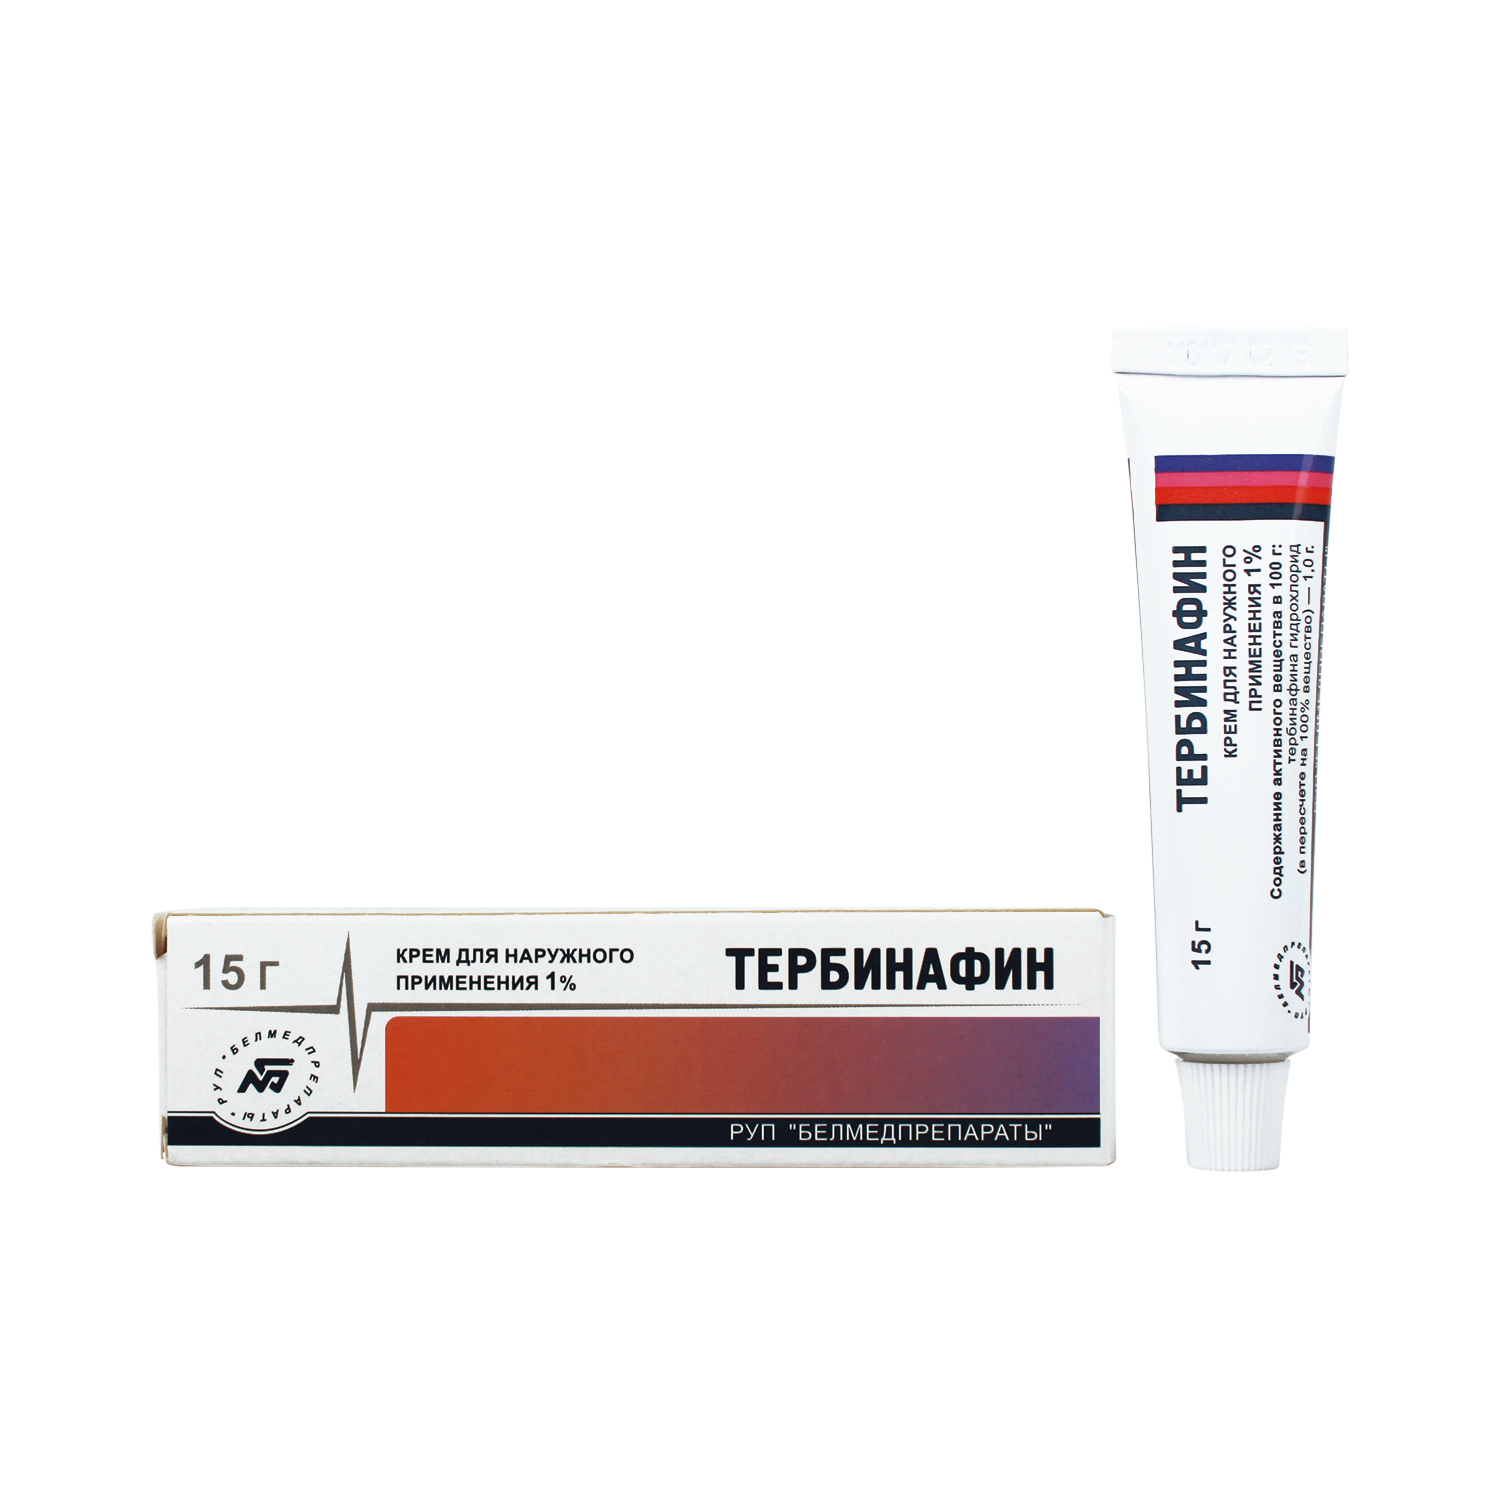 Тербинафин крем 1% туба 15г  по цене 170,0 руб в интернет-аптеке .